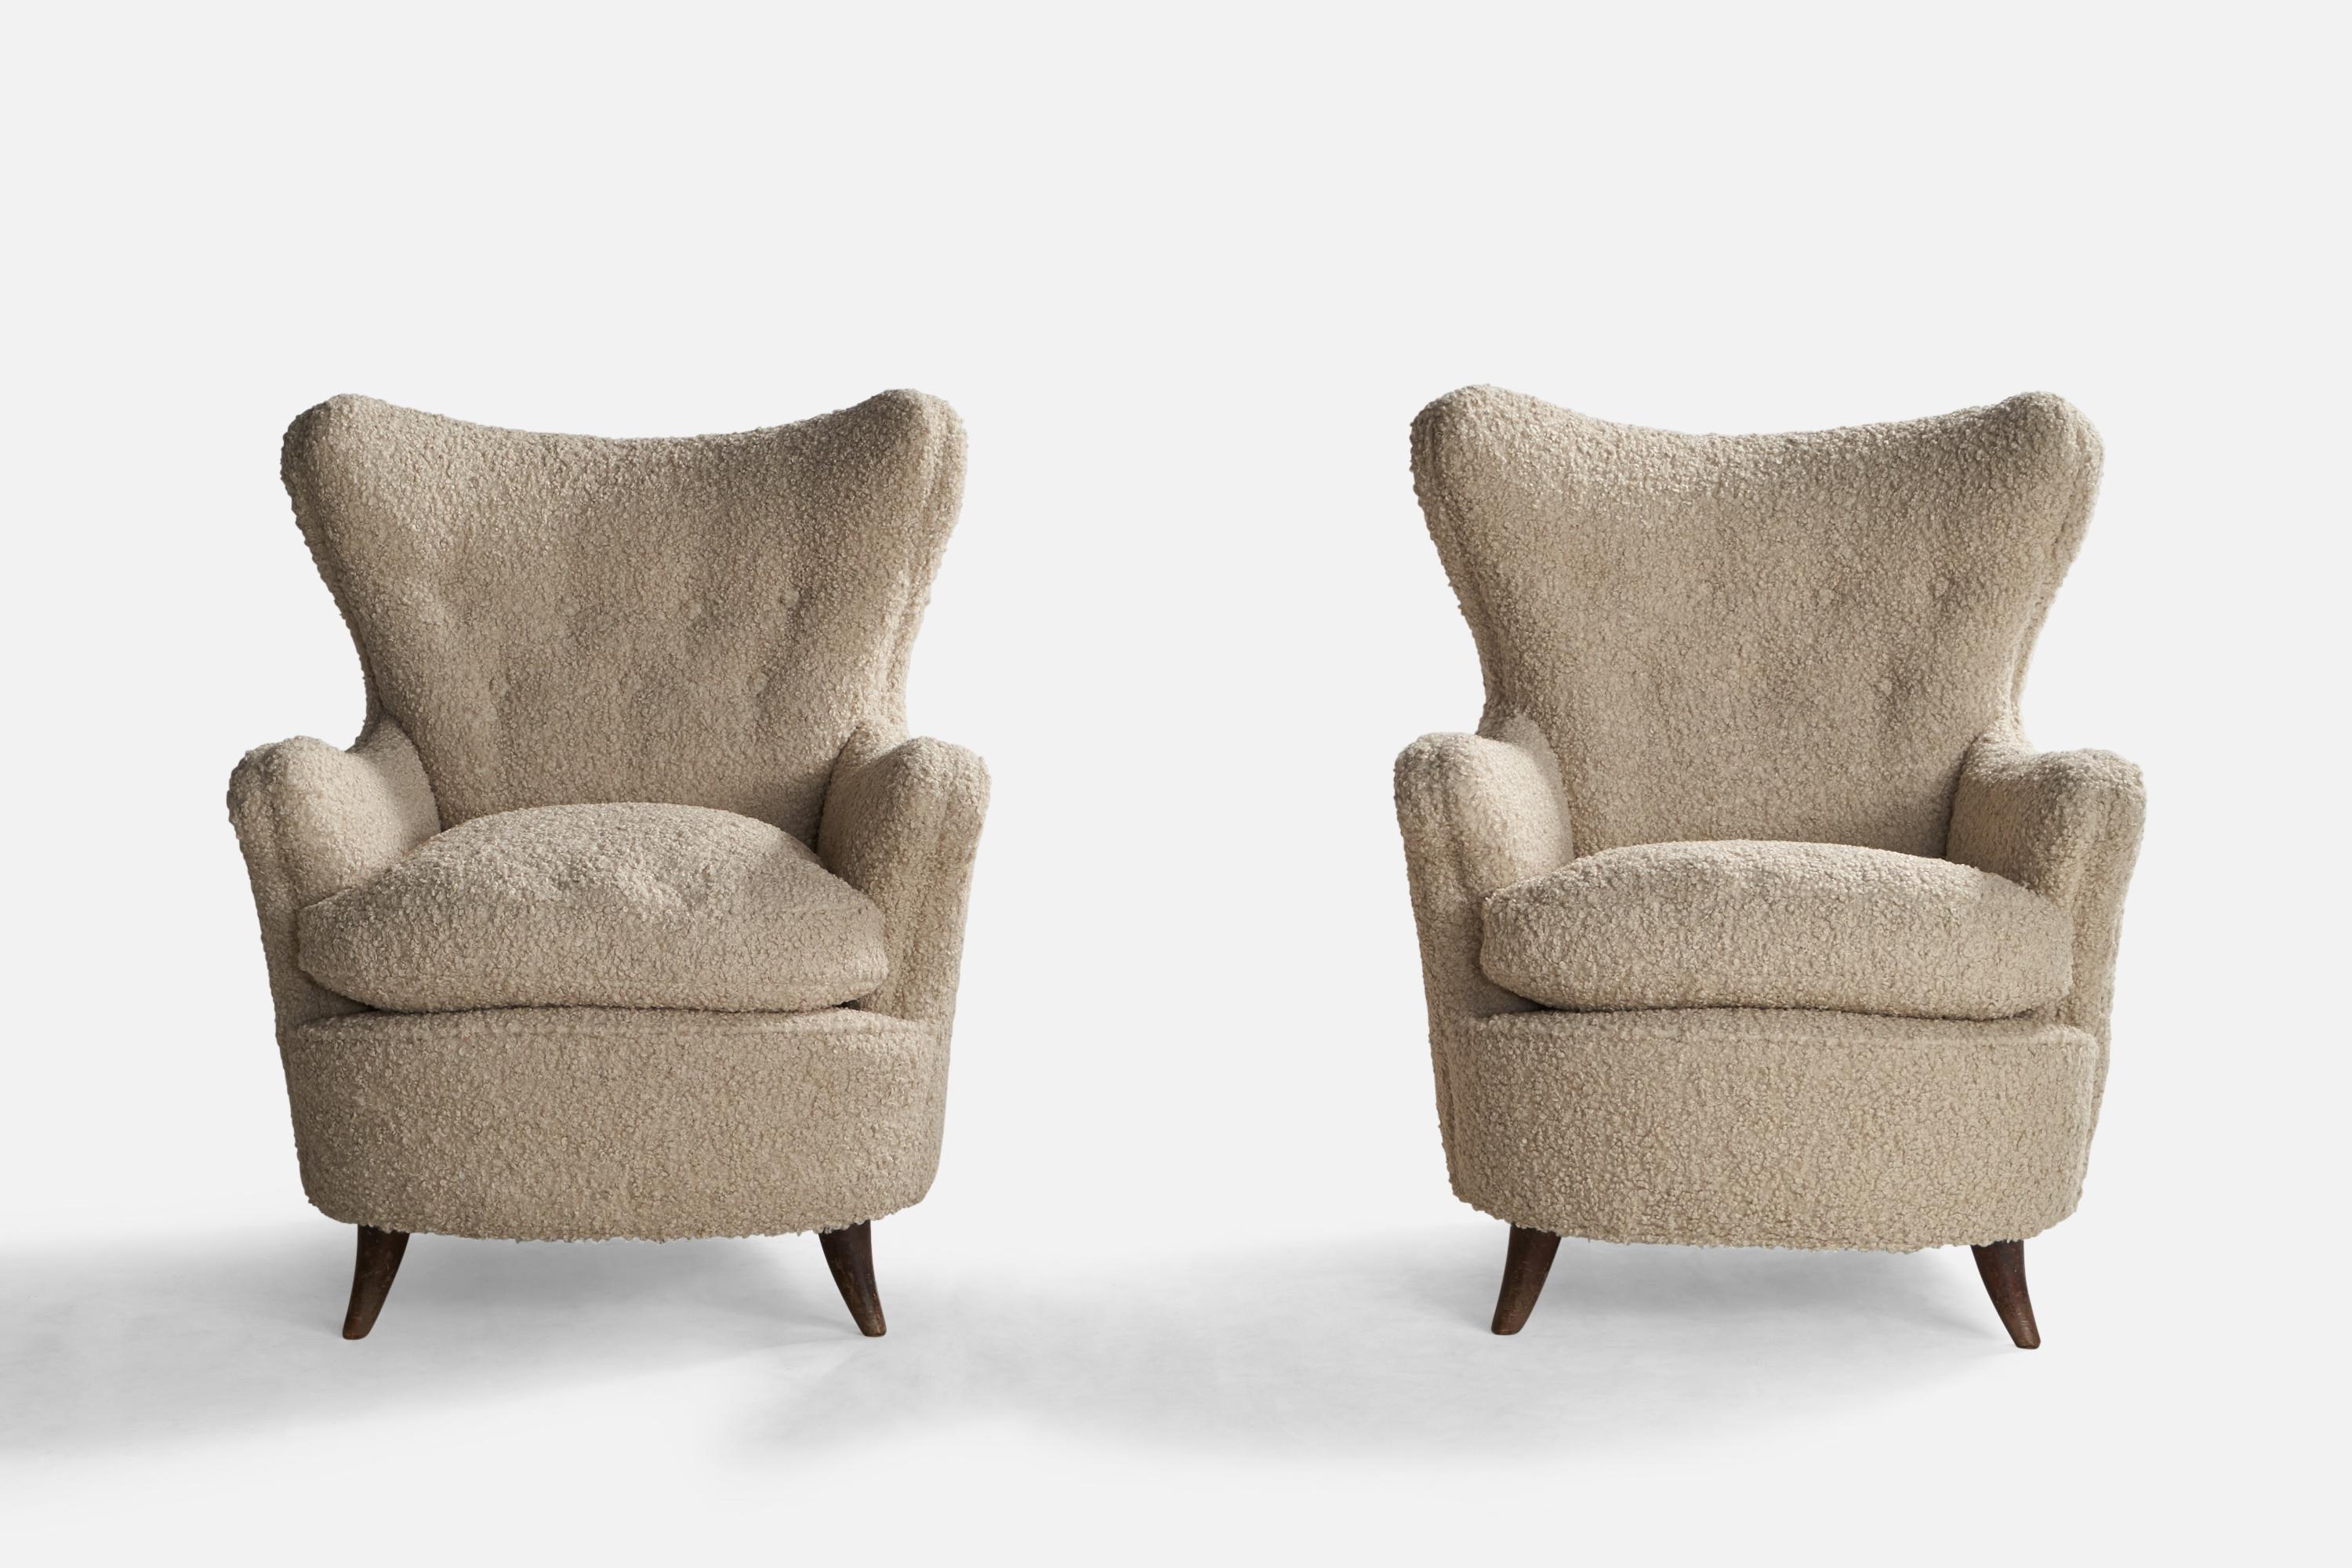 Scandinavian Modern Osvaldo Borsani, Lounge Chairs, Wood, Fabric, Italy, 1940s For Sale